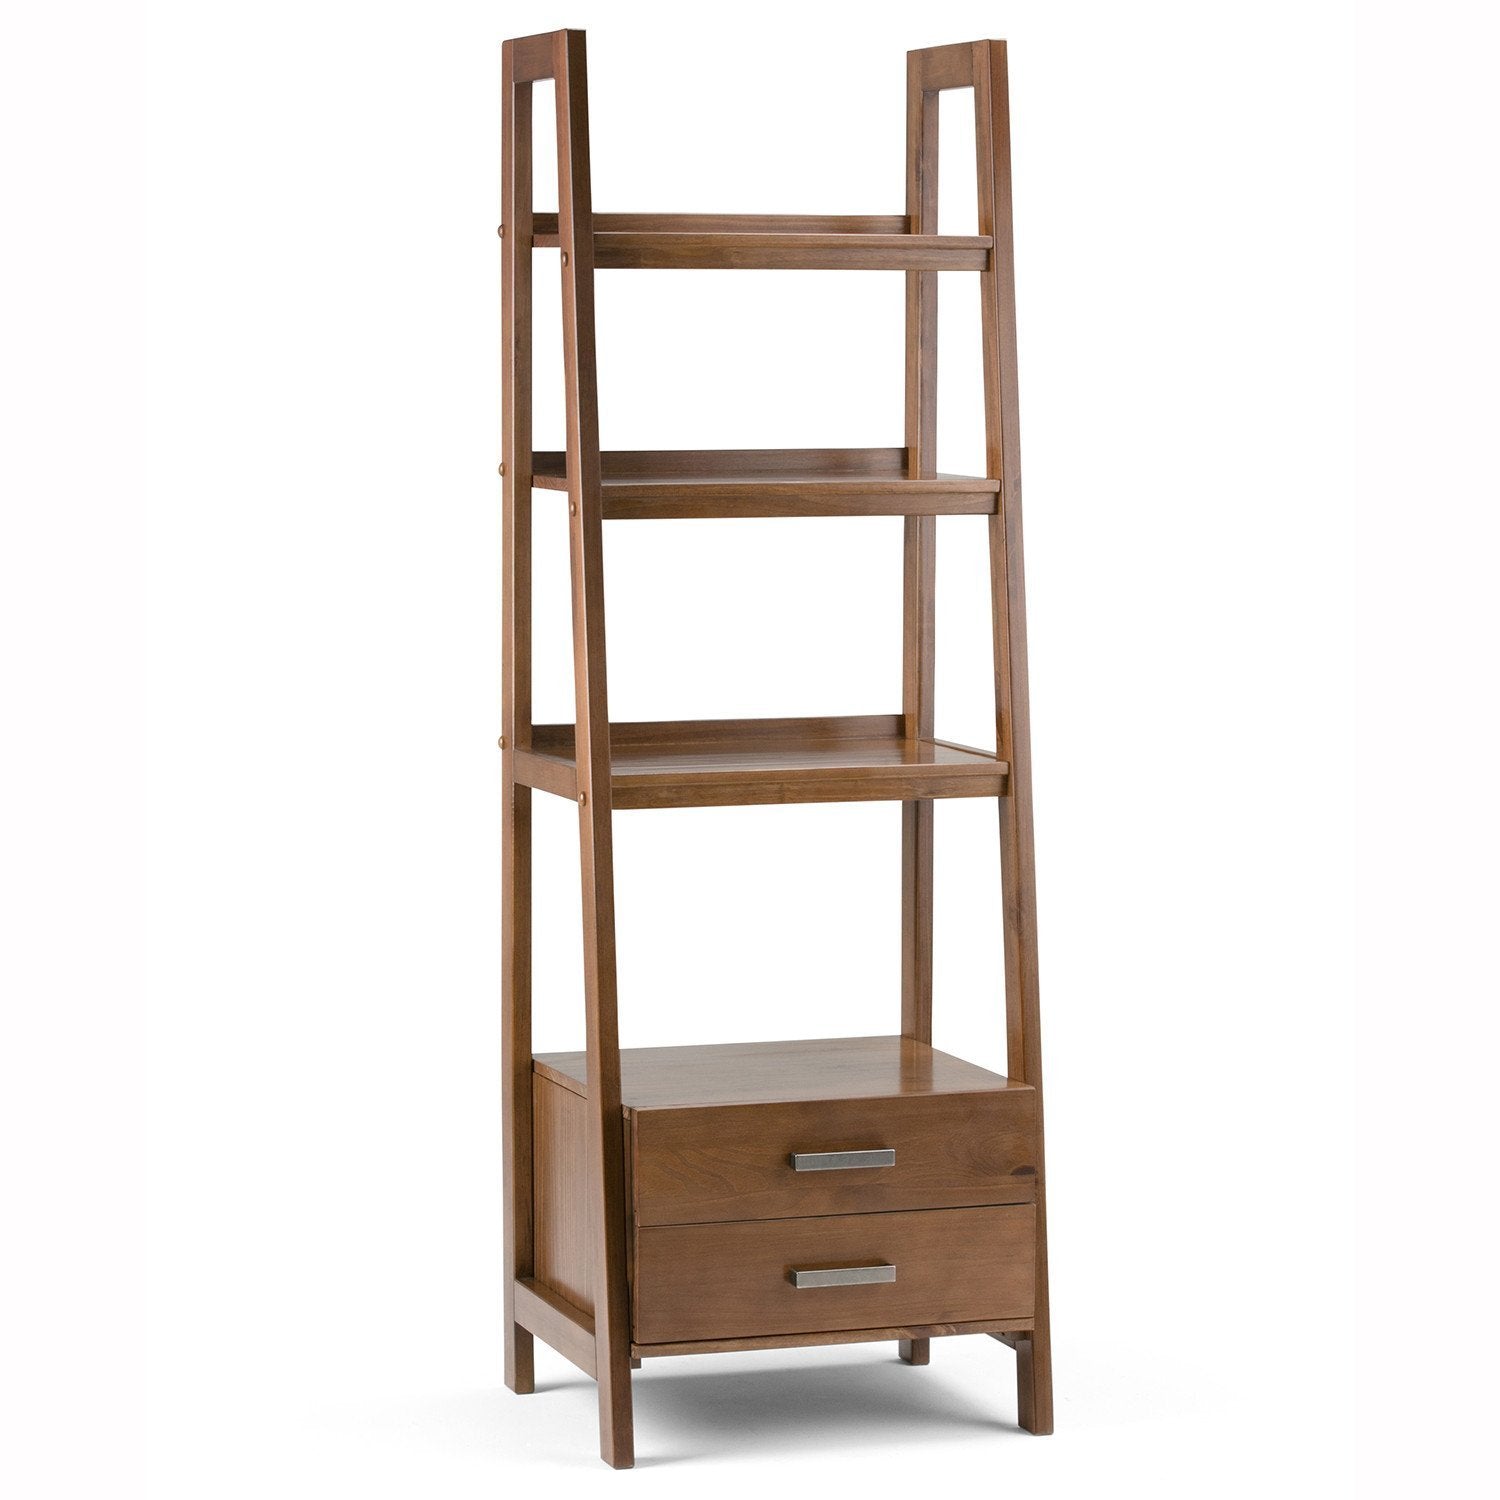 15 Ladder Shelf Ideas For Stylish Storage - Ladder Shelves